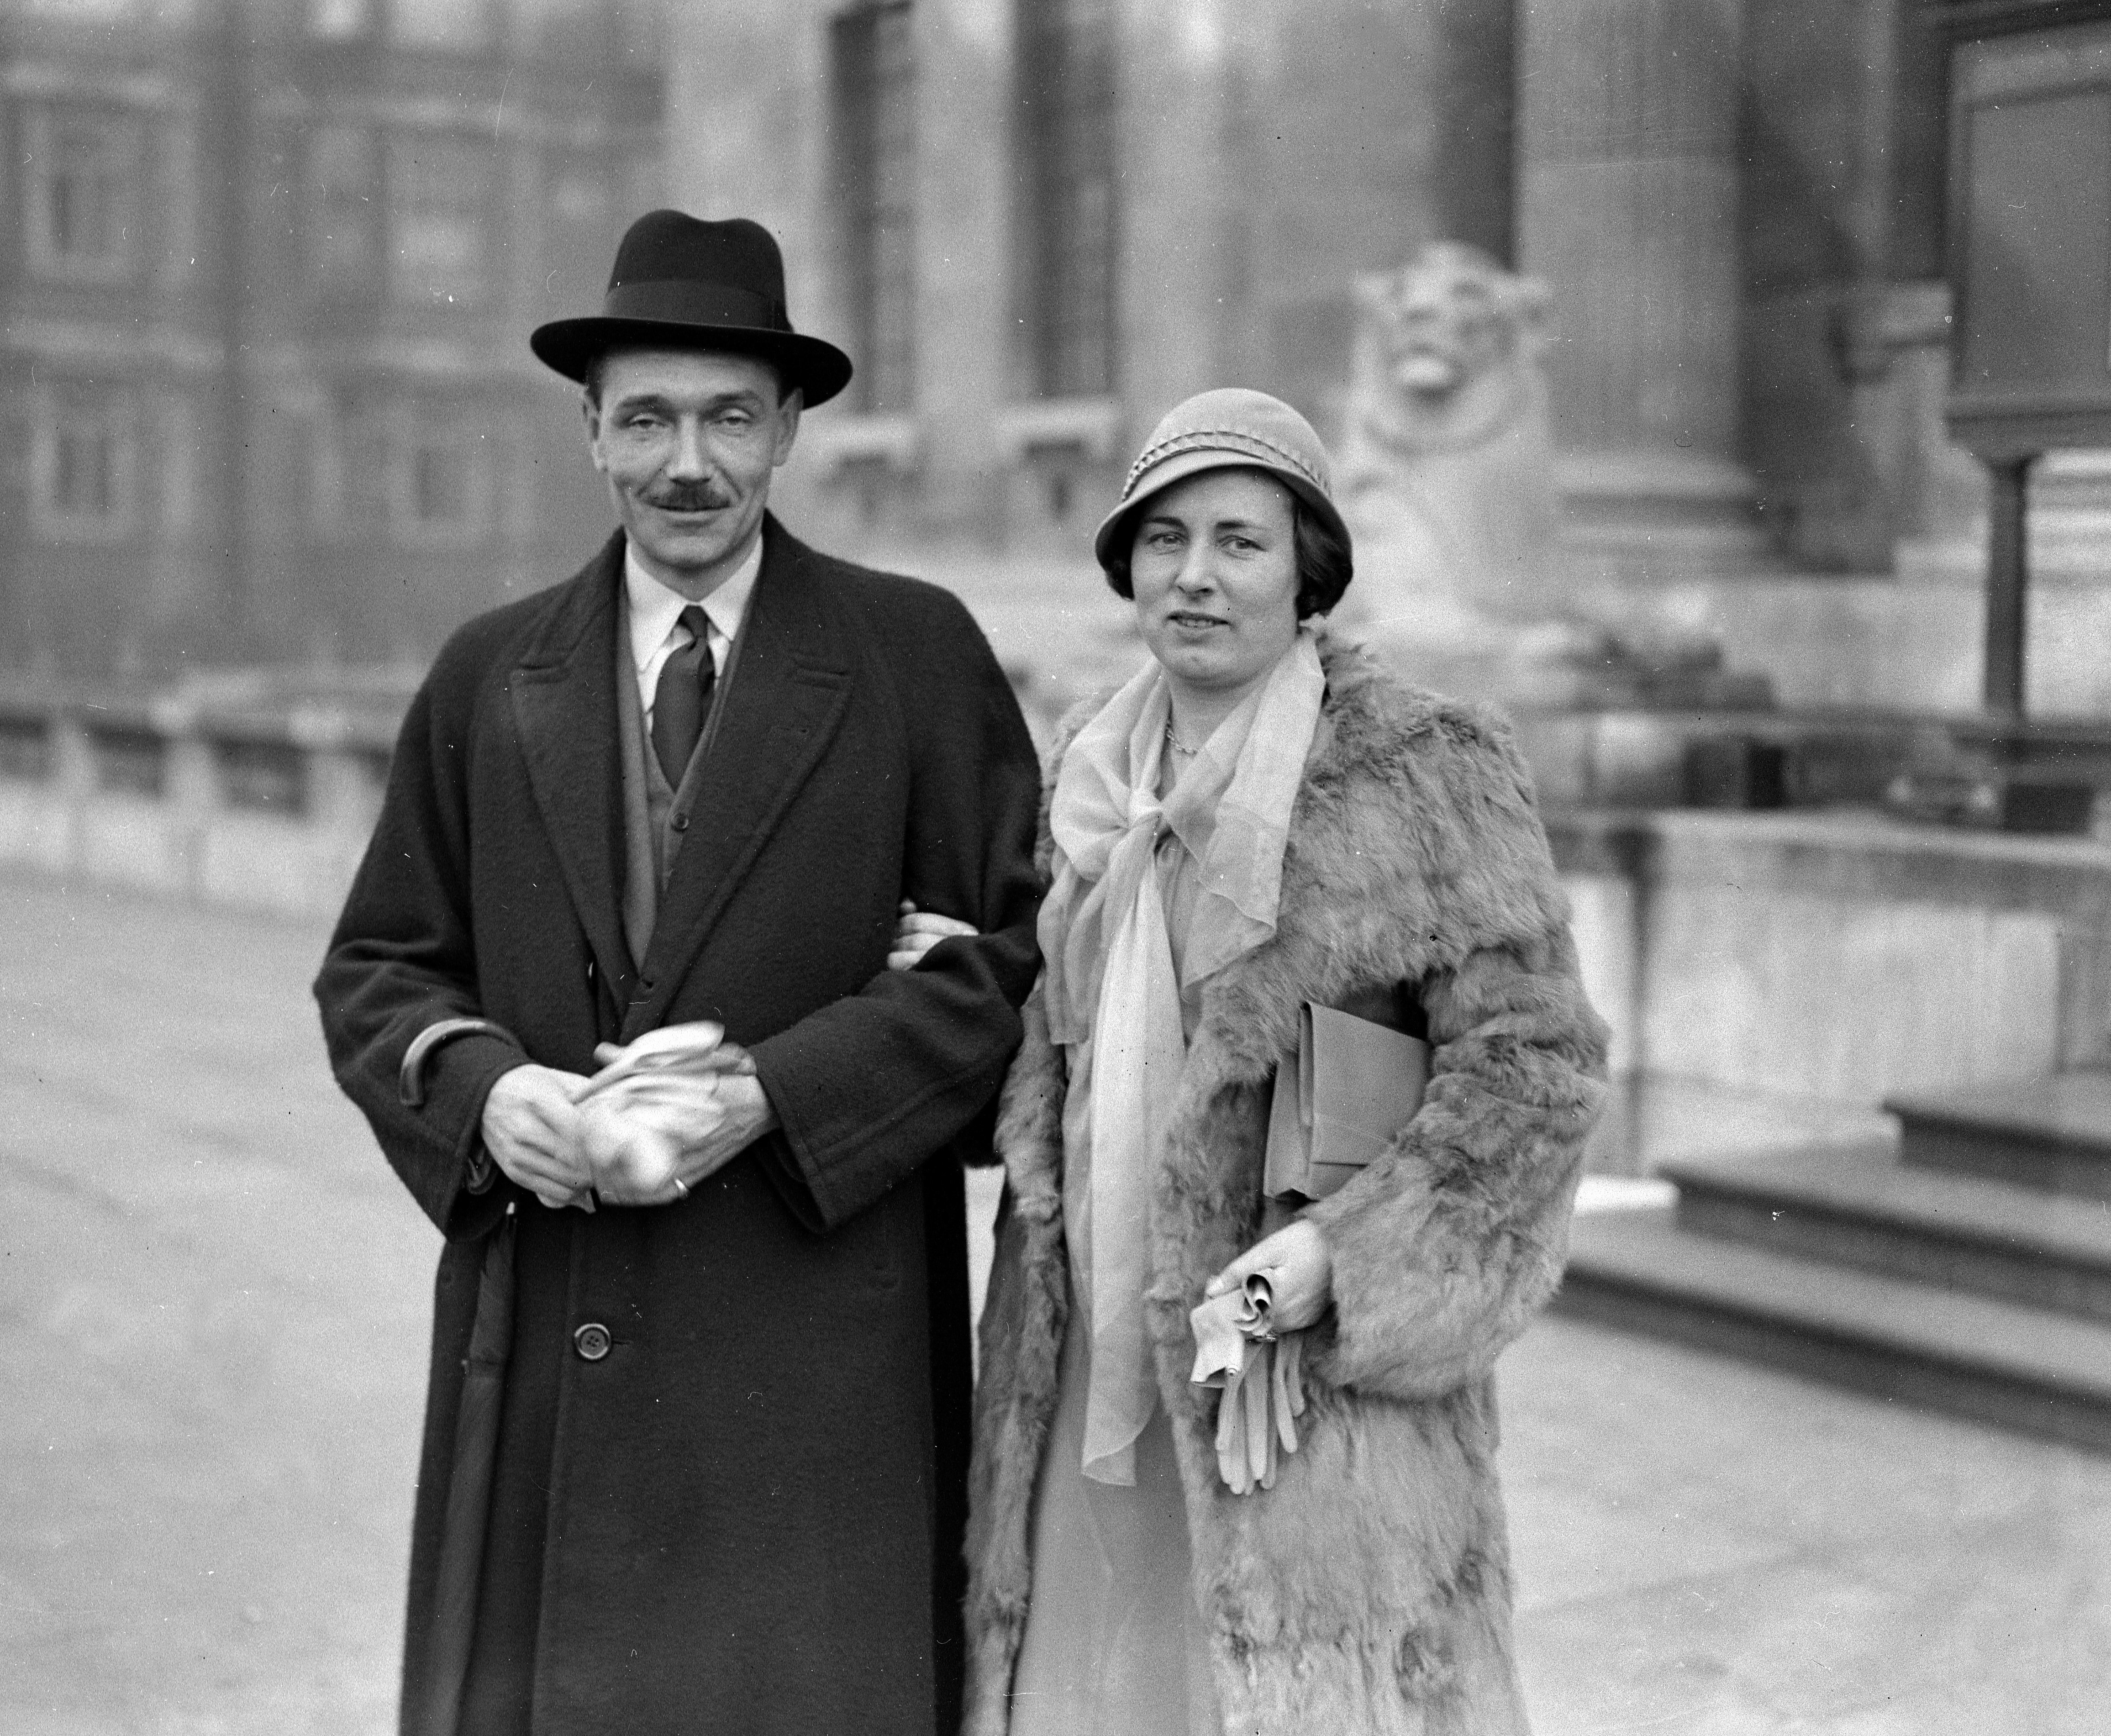 Gerald Clayton Beadle & Jocelyn Rae at The Old Marylebone Town Hall 1900s